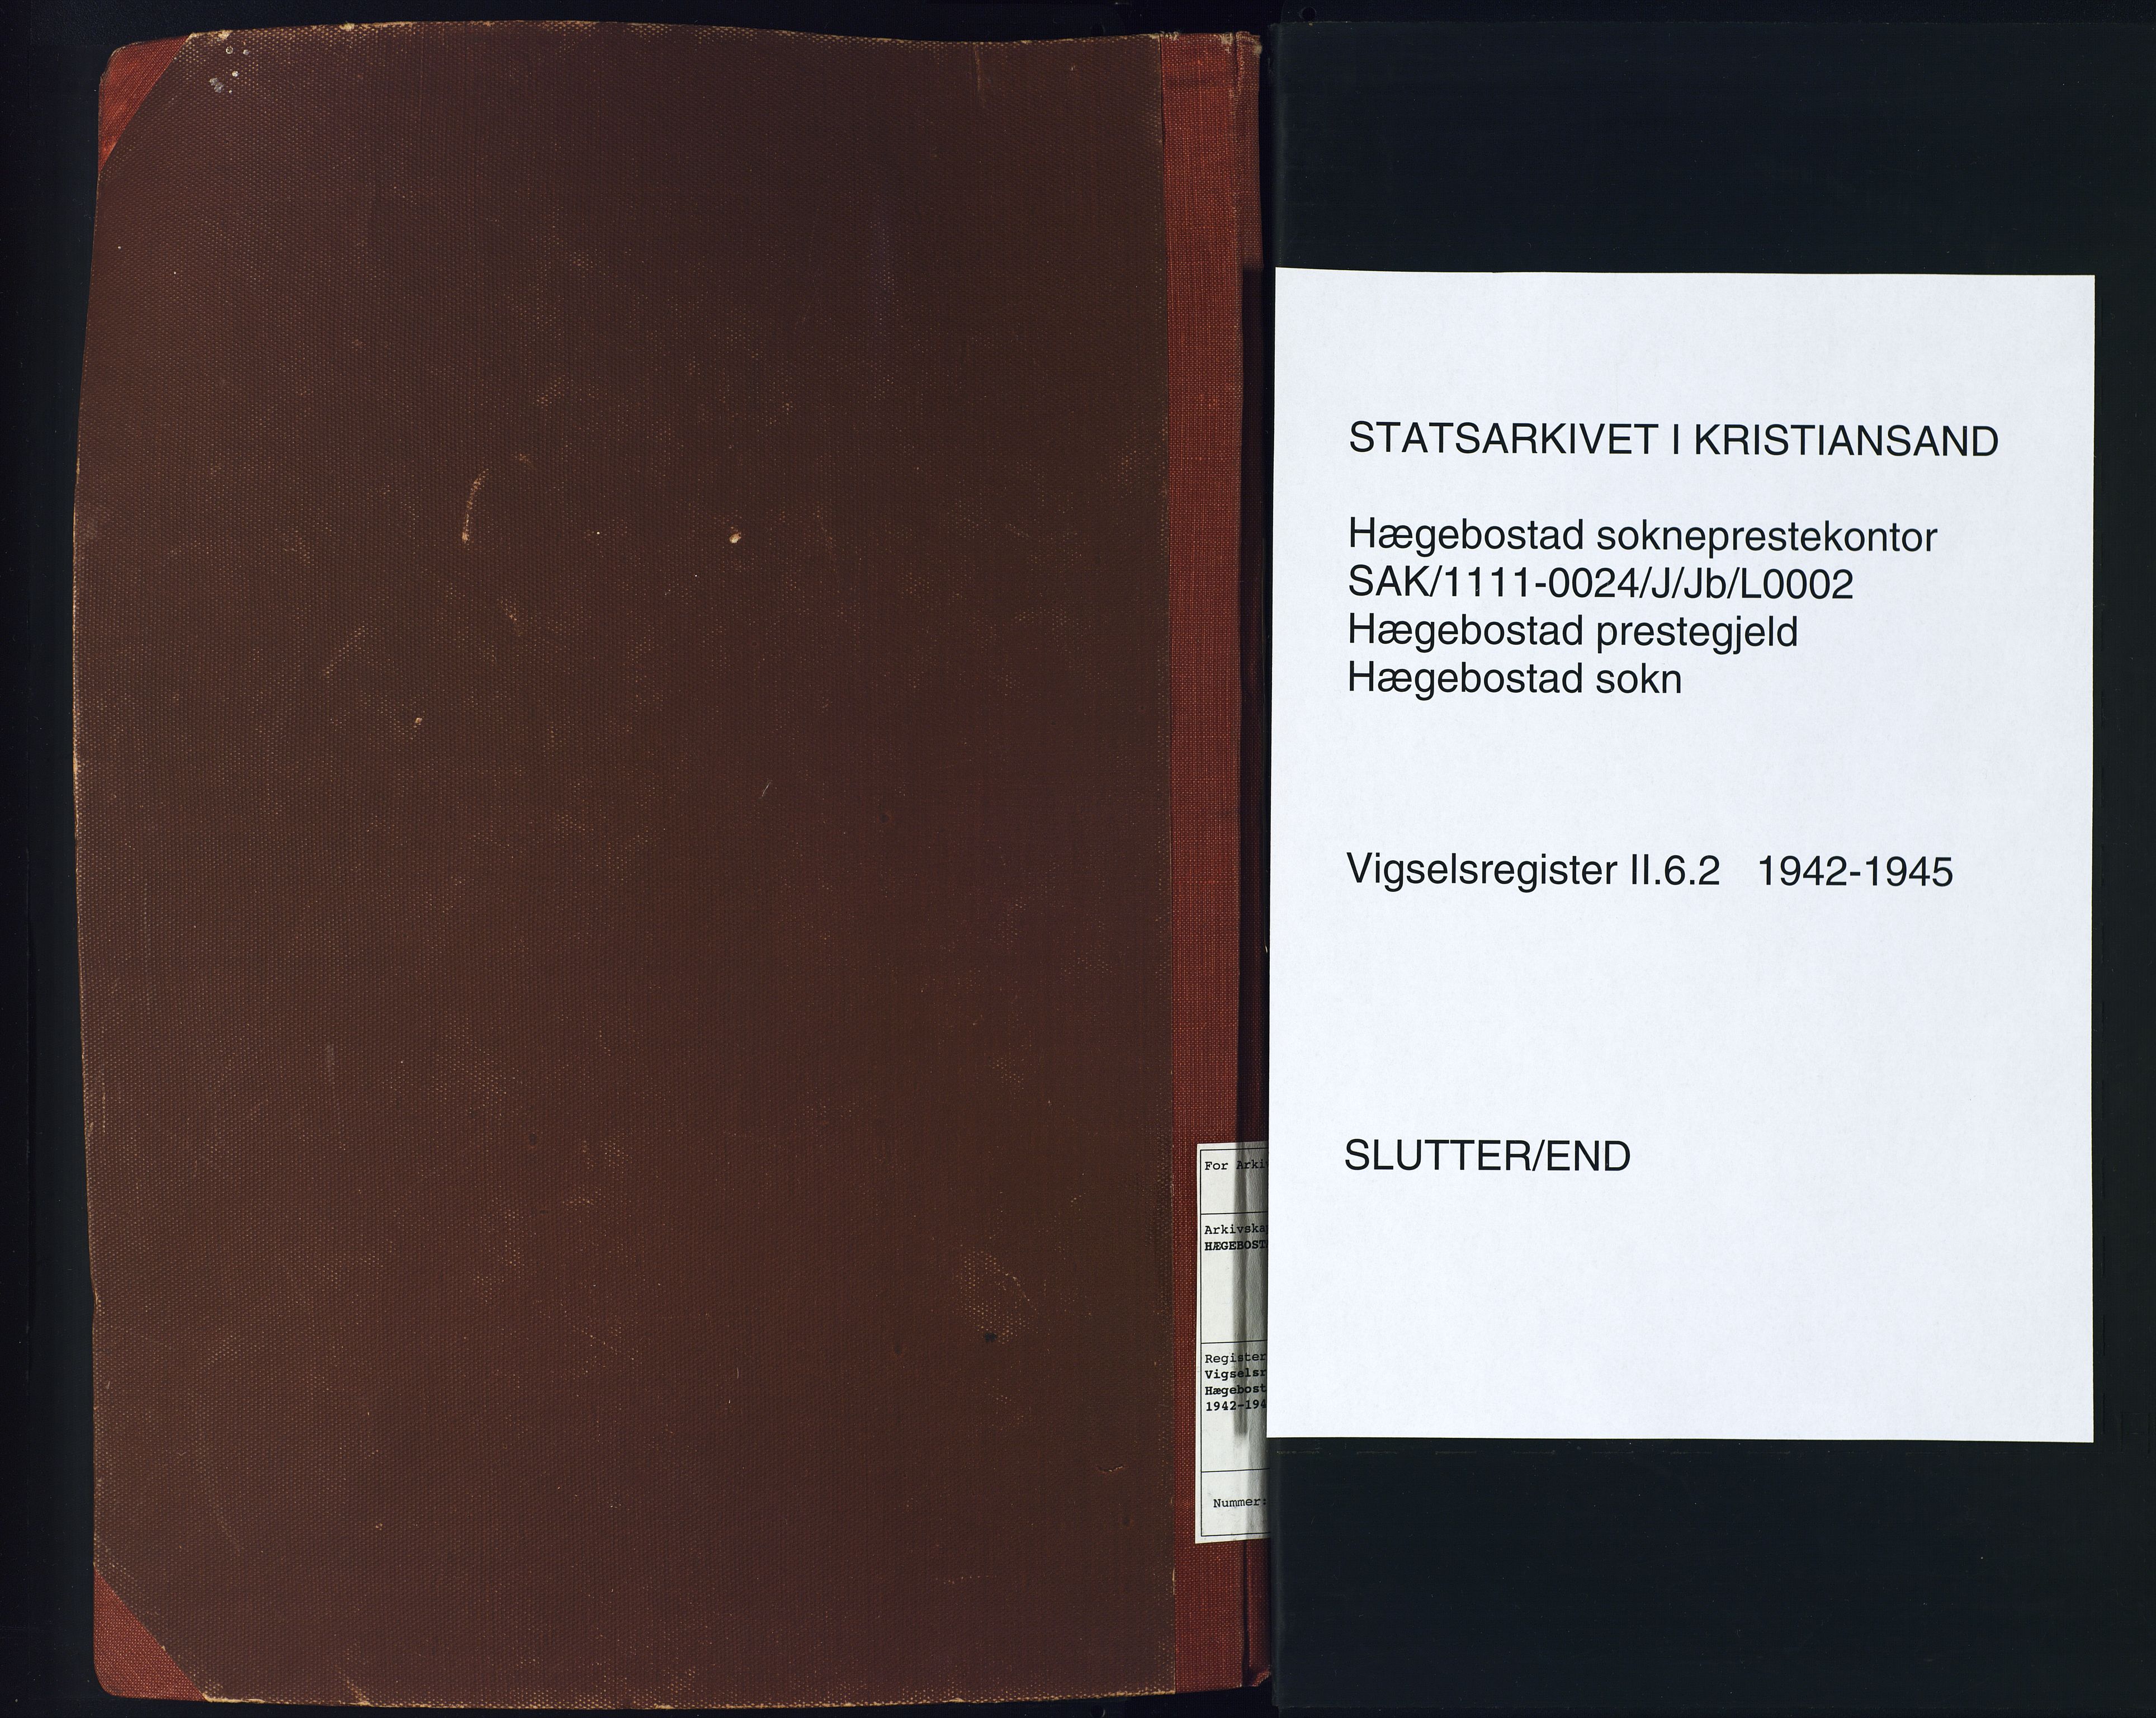 Hægebostad sokneprestkontor, SAK/1111-0024/J/Jb/L0002: Marriage register no. II.6.2, 1942-1945